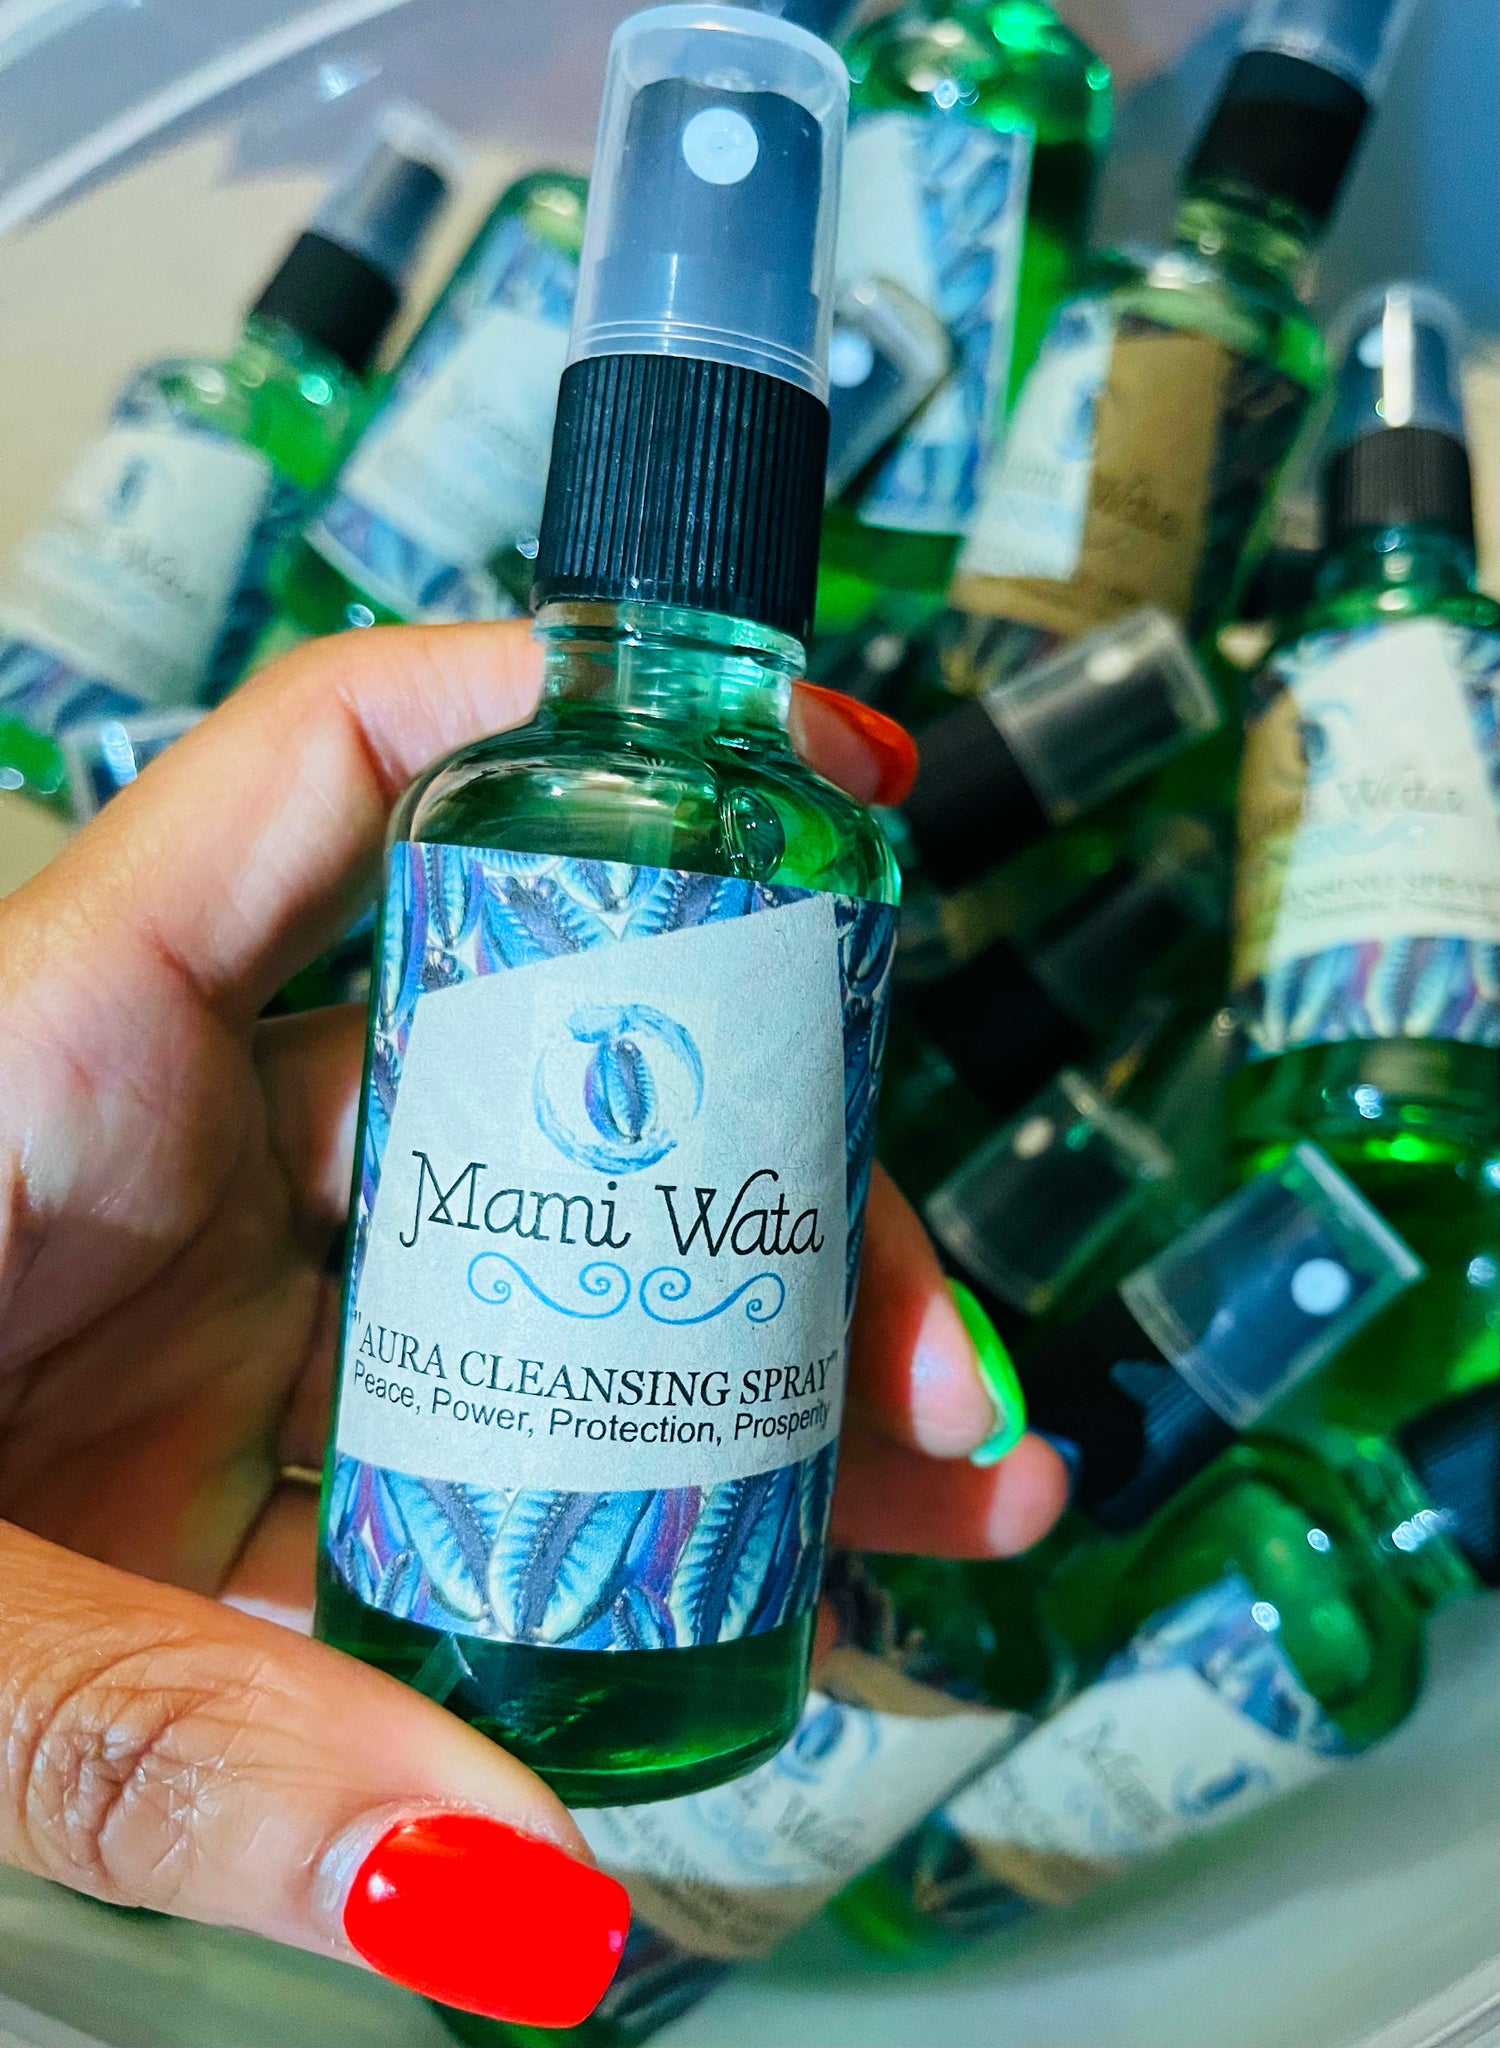 Mami Wata “Aura Cleansing Spray”